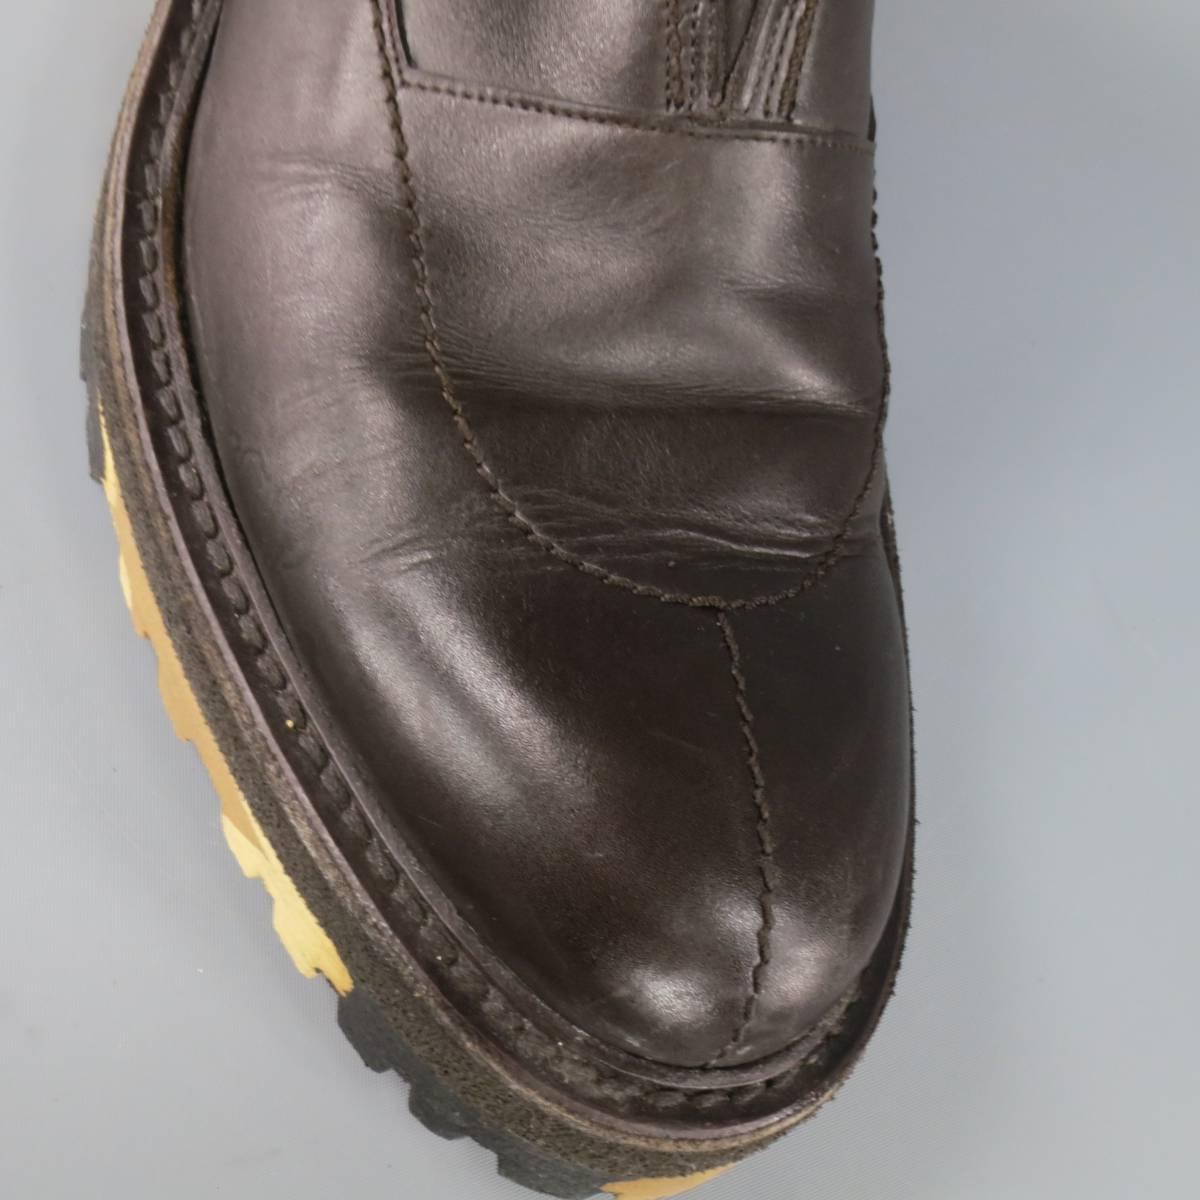 Black Men's YVES SAINT LAURENT Size 10 Brown Leather Camouflage Sole Chelsea Boots